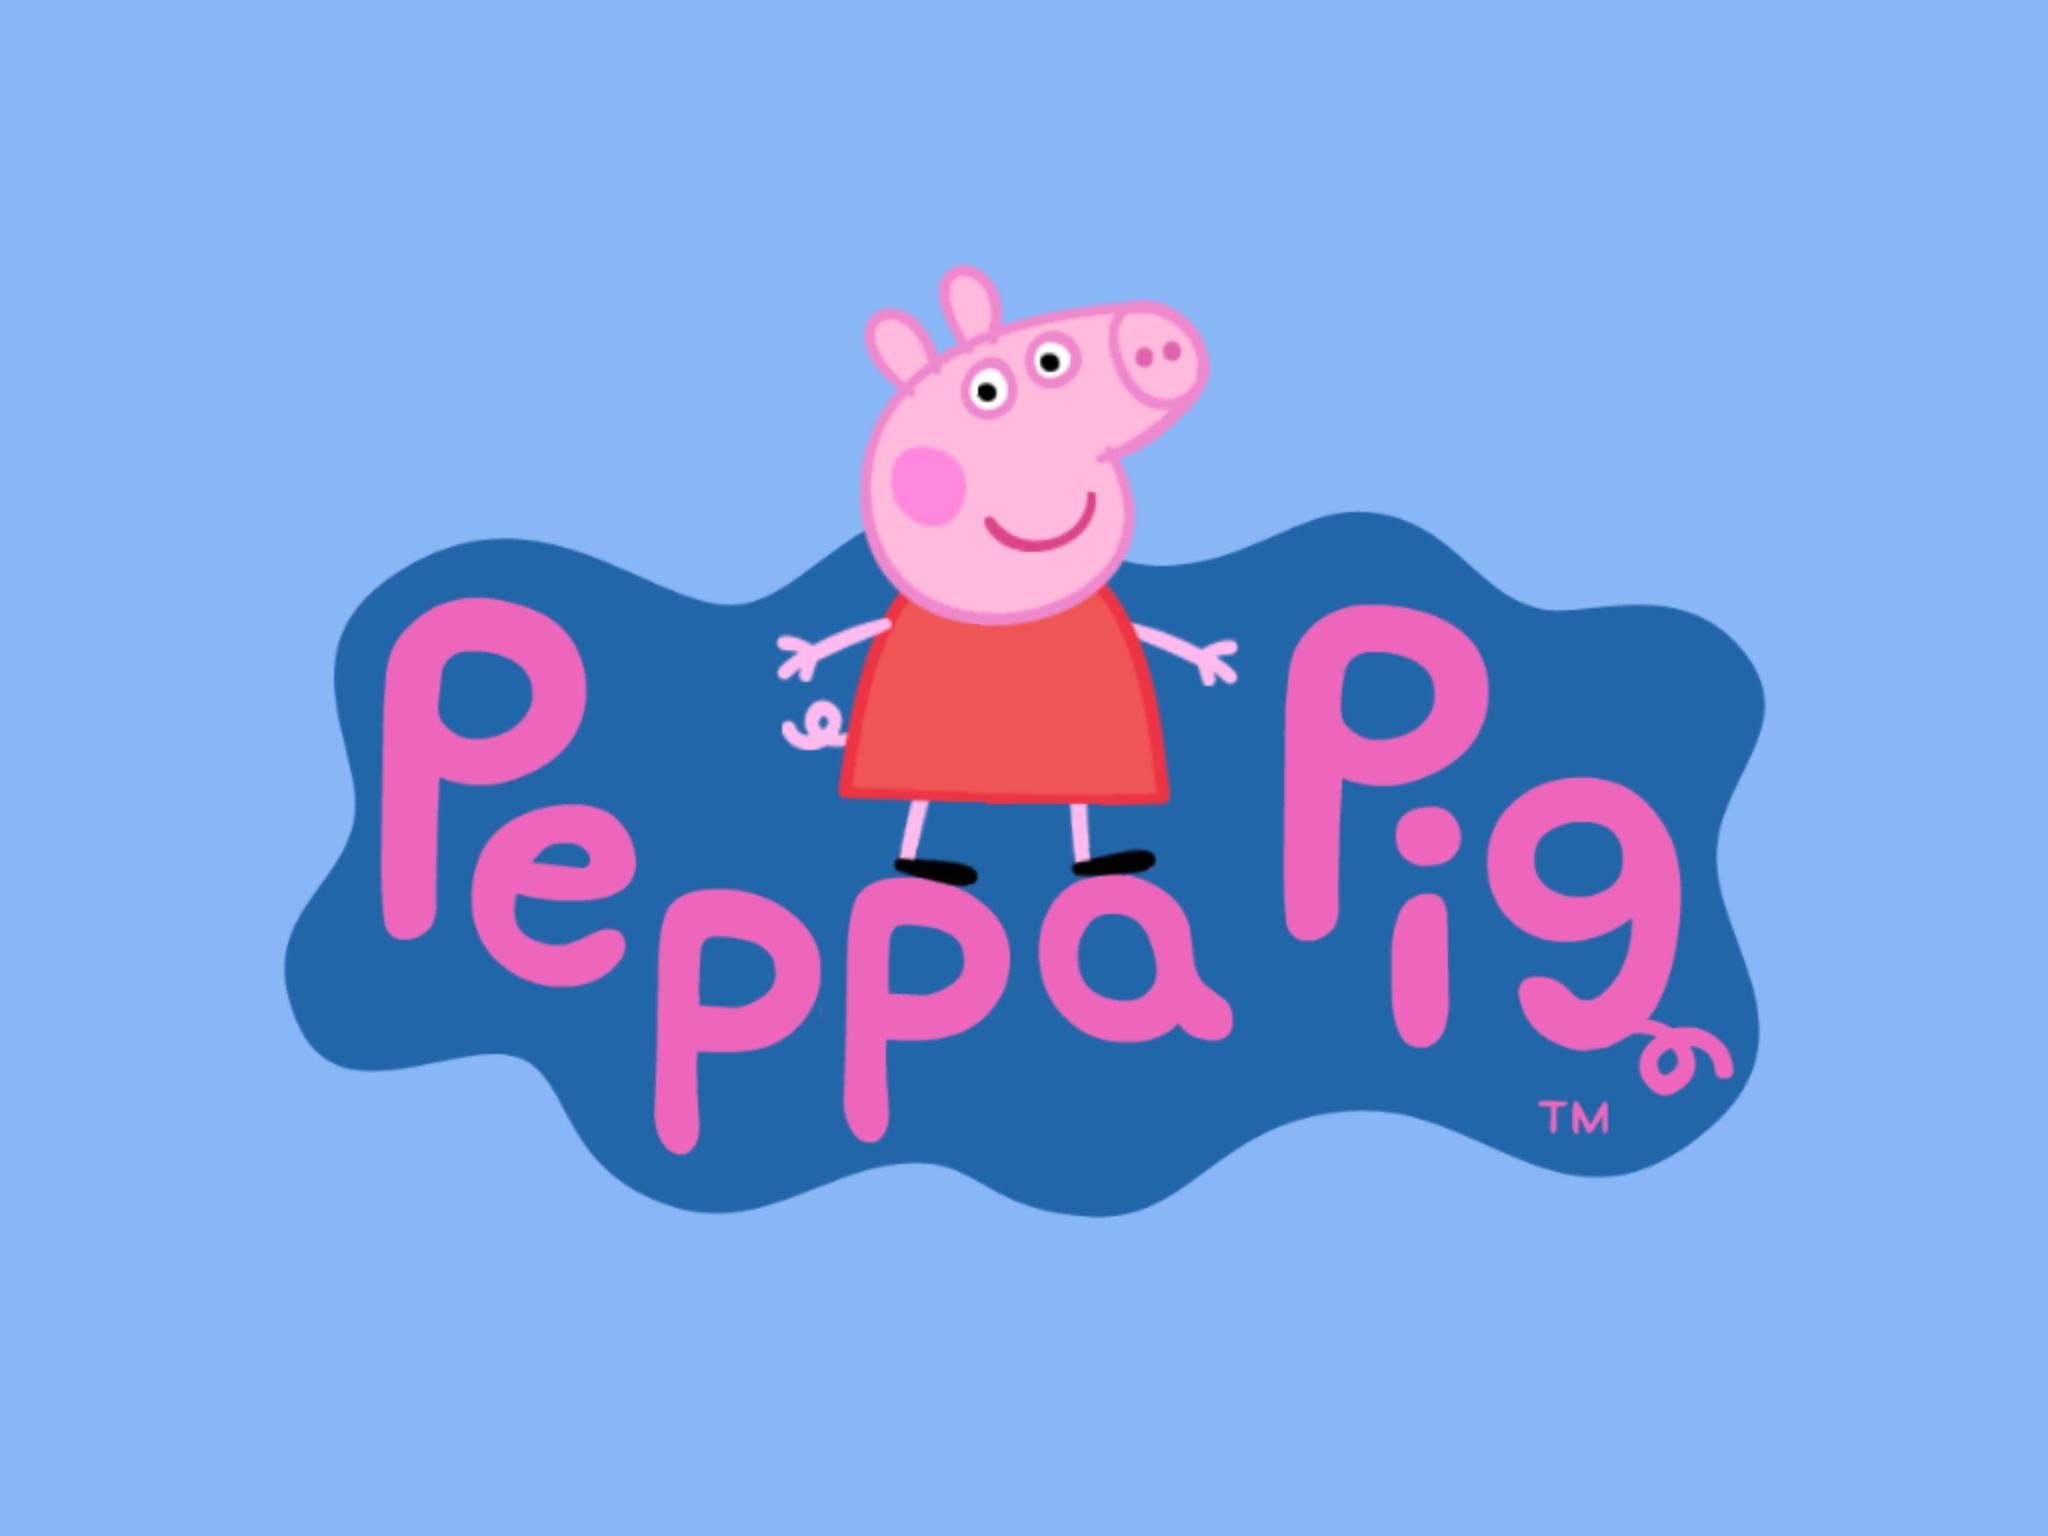 Casa peppa pig wallpaper